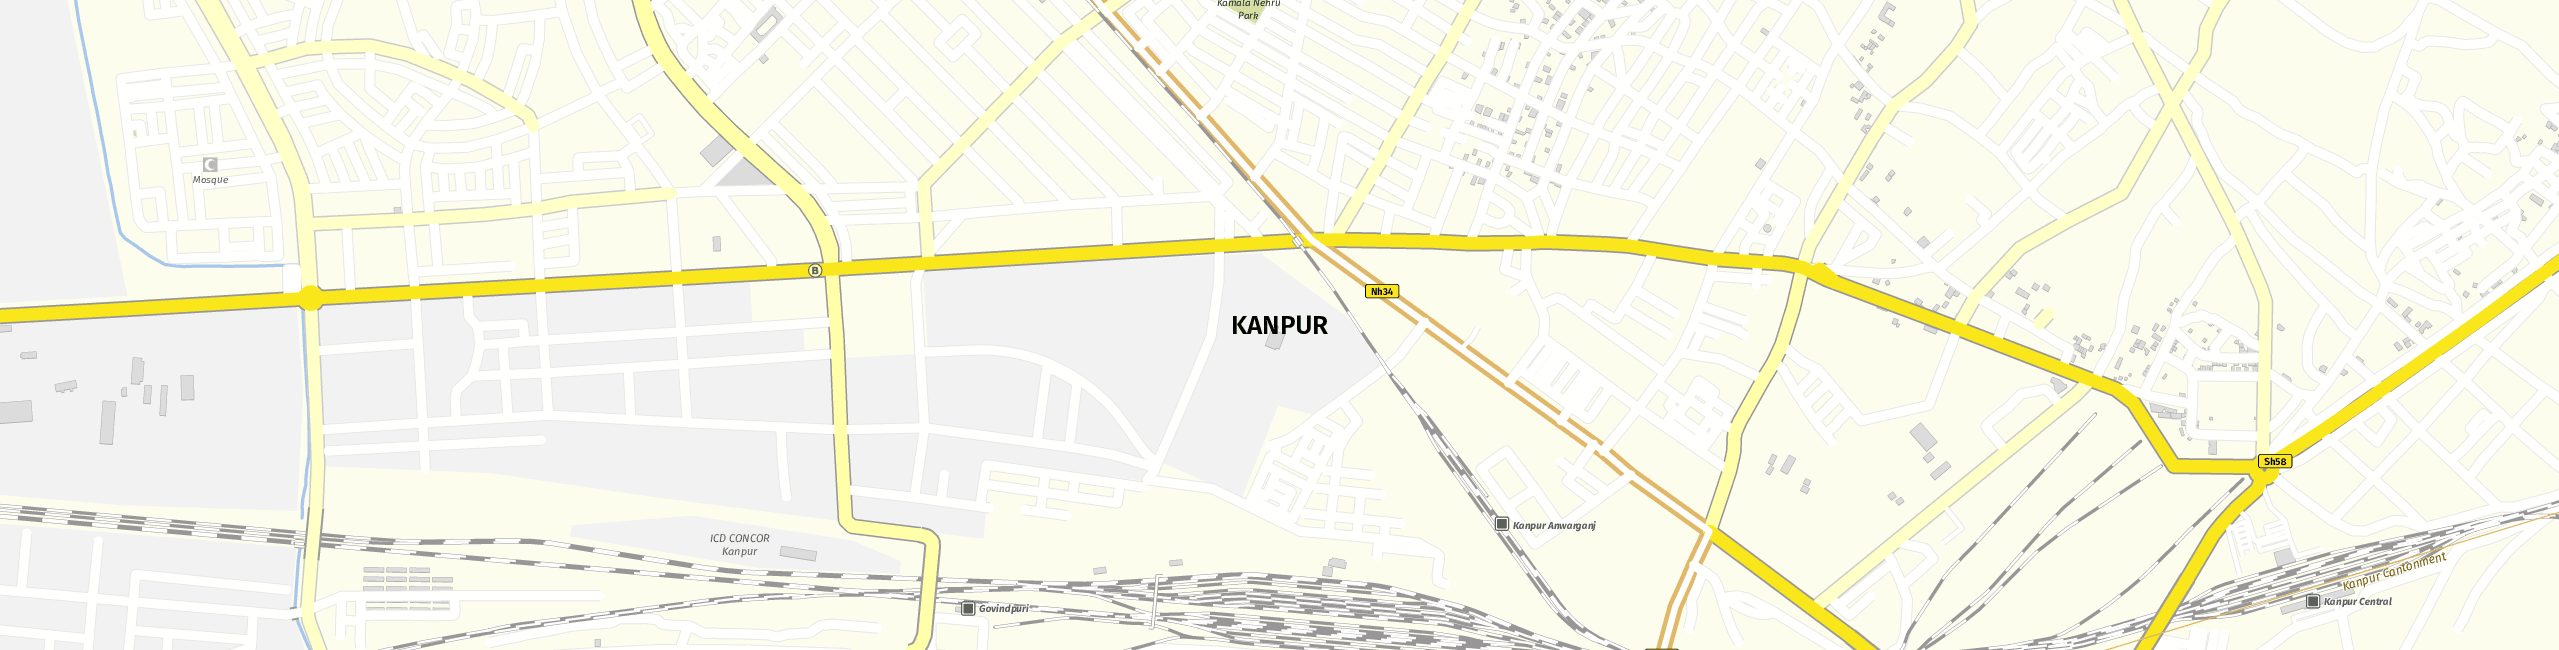 Stadtplan Kanpur zum Downloaden.